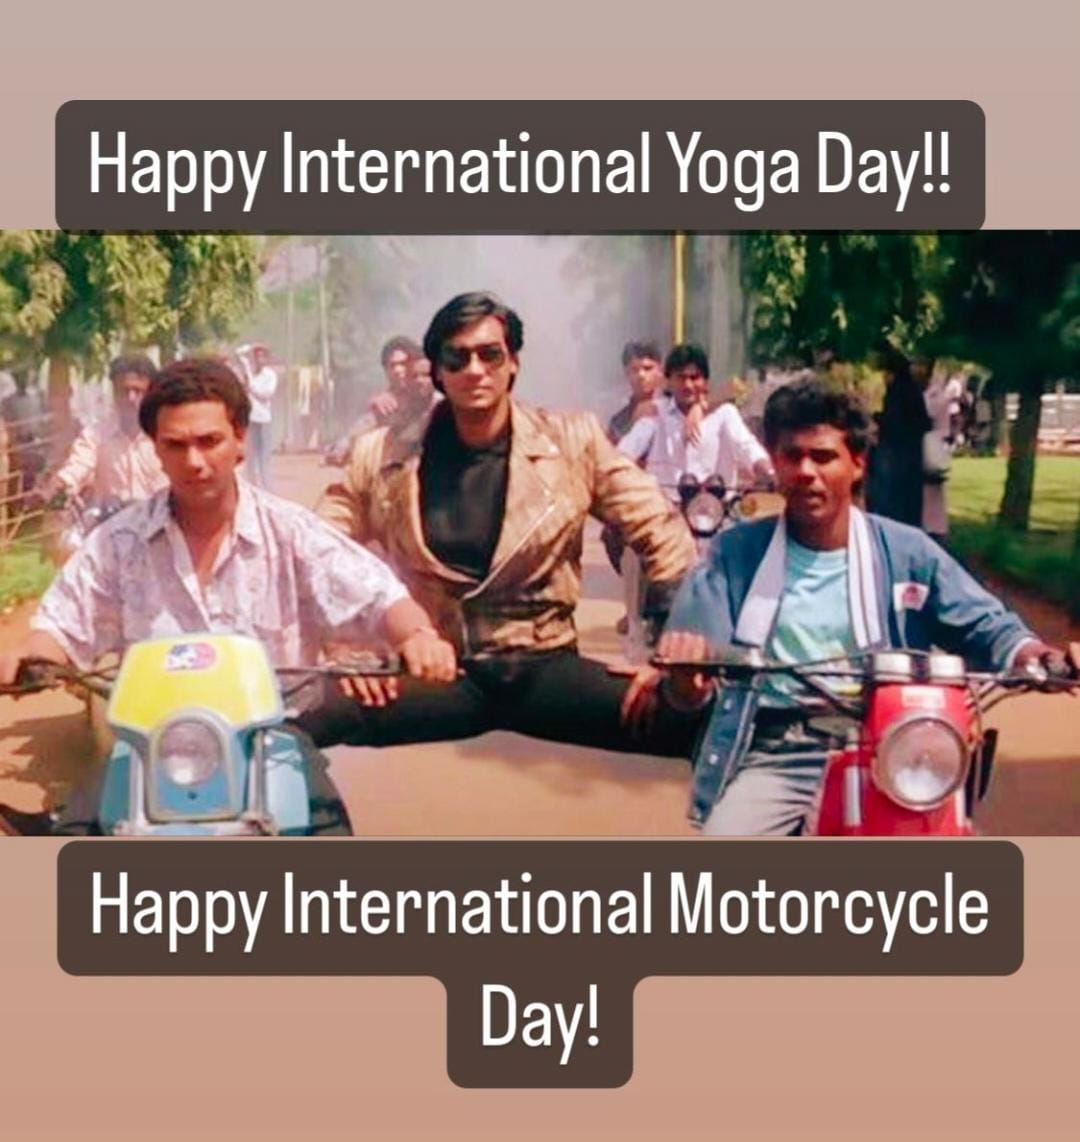 #InternationalYogaDay23 #internationalmotorcycleday #yogachallenge #stayhealthy #yoga #ajaydevgan #phoolaurkaante